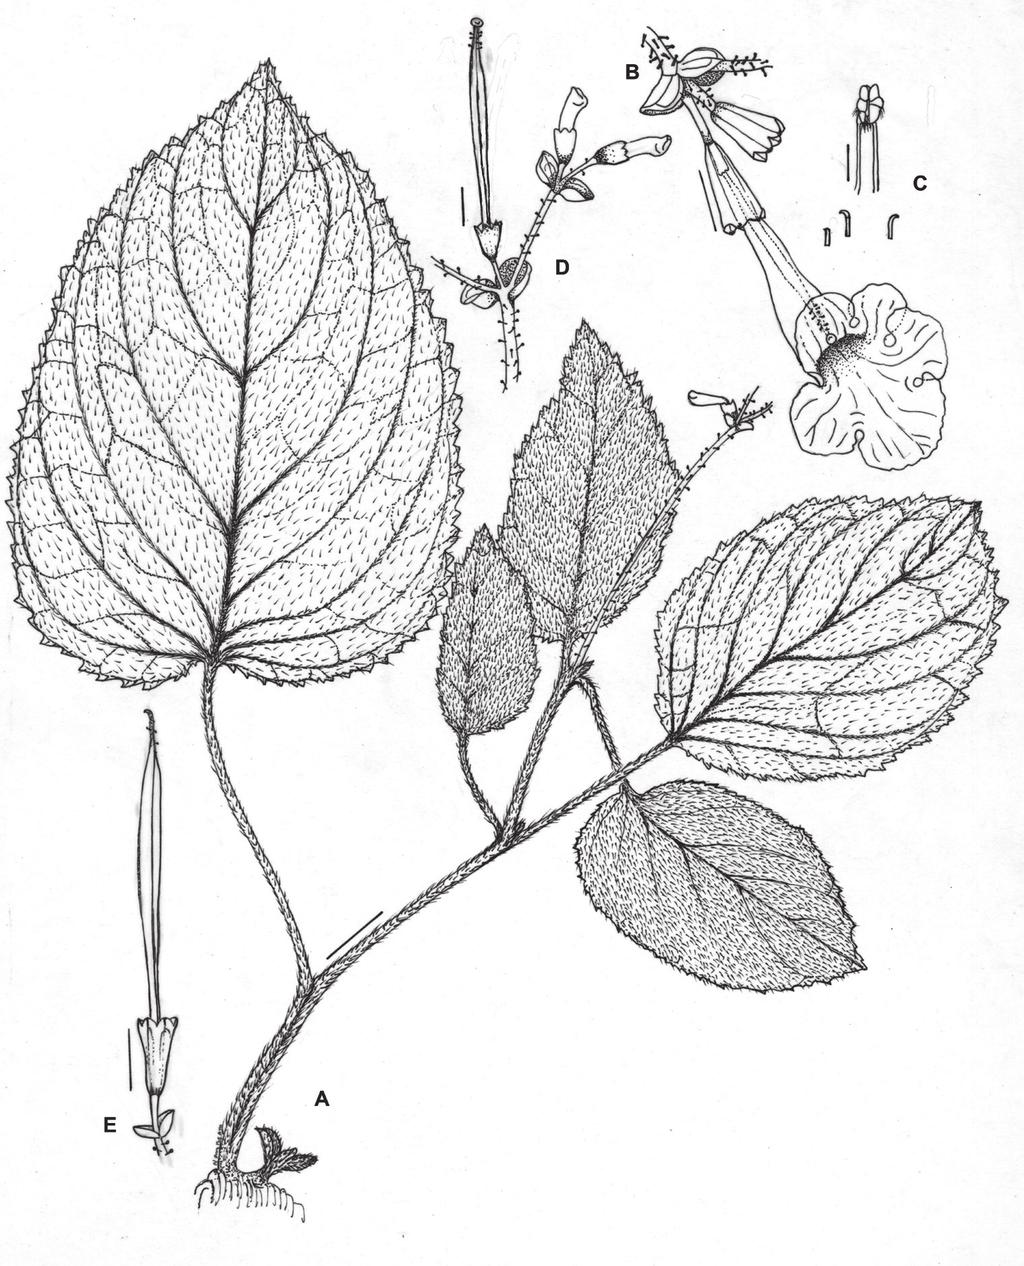 200 Gard. Bull. Singapore 65(2) 2013 Fig. 3. Didymocarpus epithemoides B.L.Burtt. A. Habit. B. Inflorescence. C. Stamens and staminodes. D. Ovary. E. Capsule.